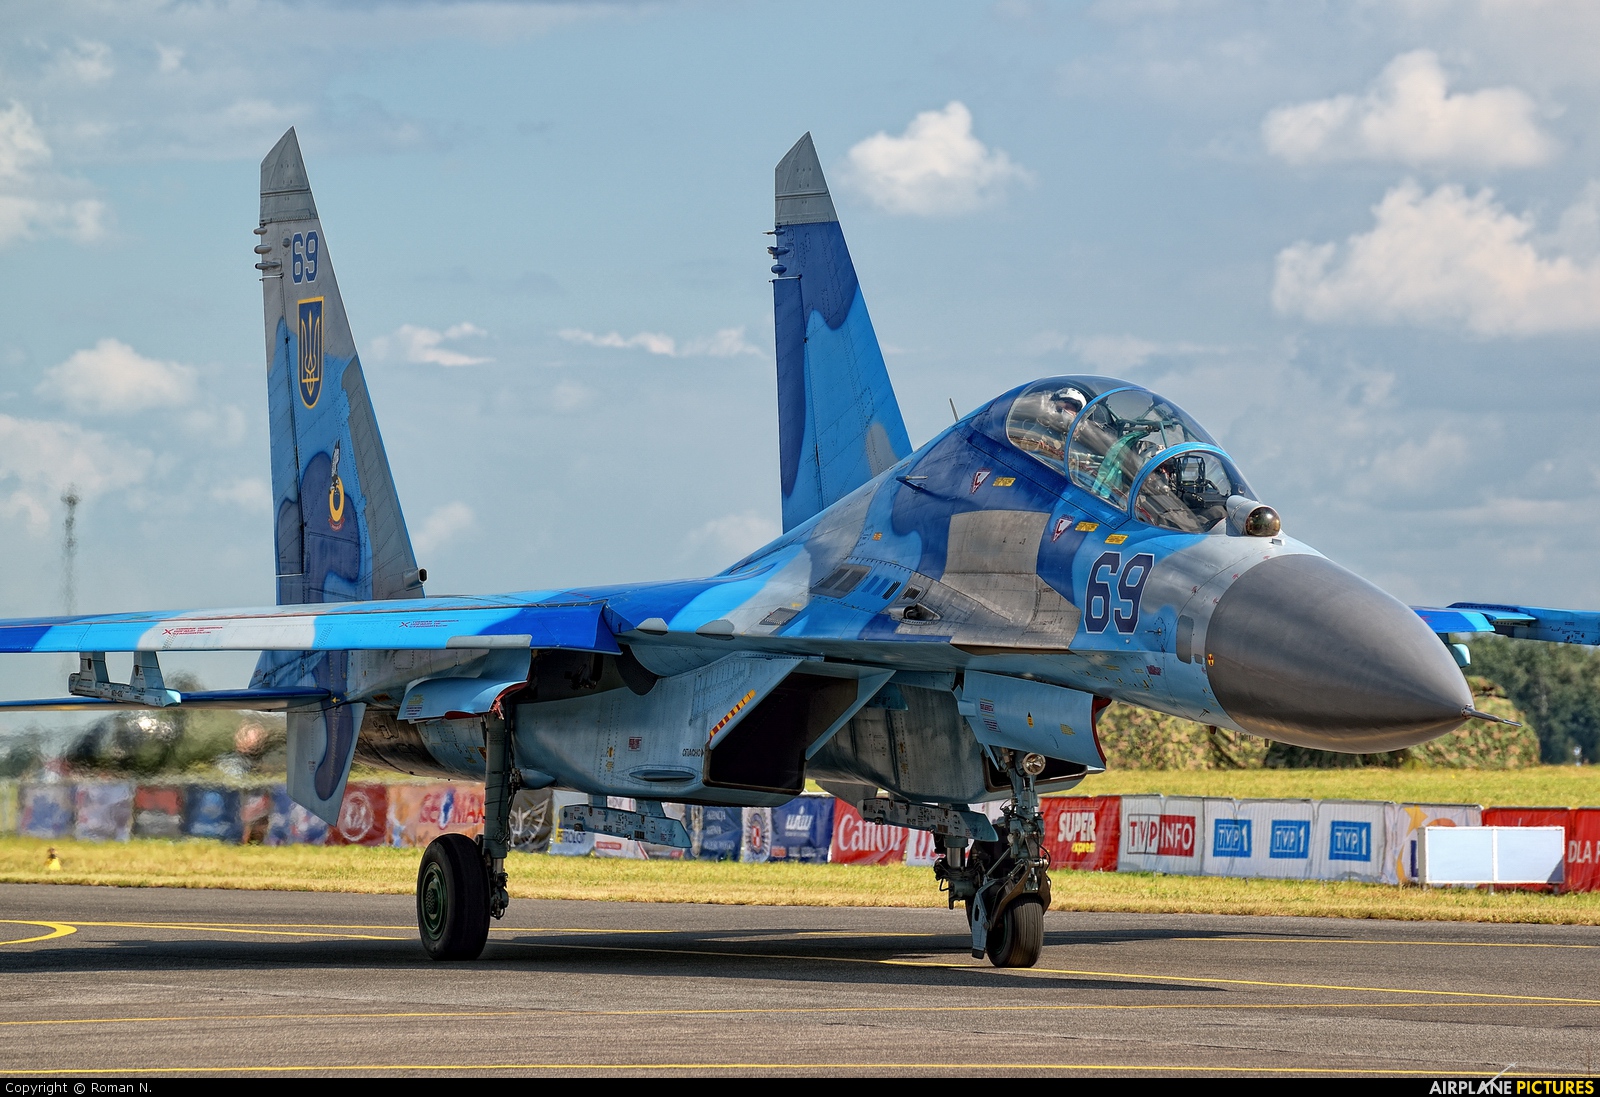 Ukraine - Air Force 69 aircraft at Radom - Sadków